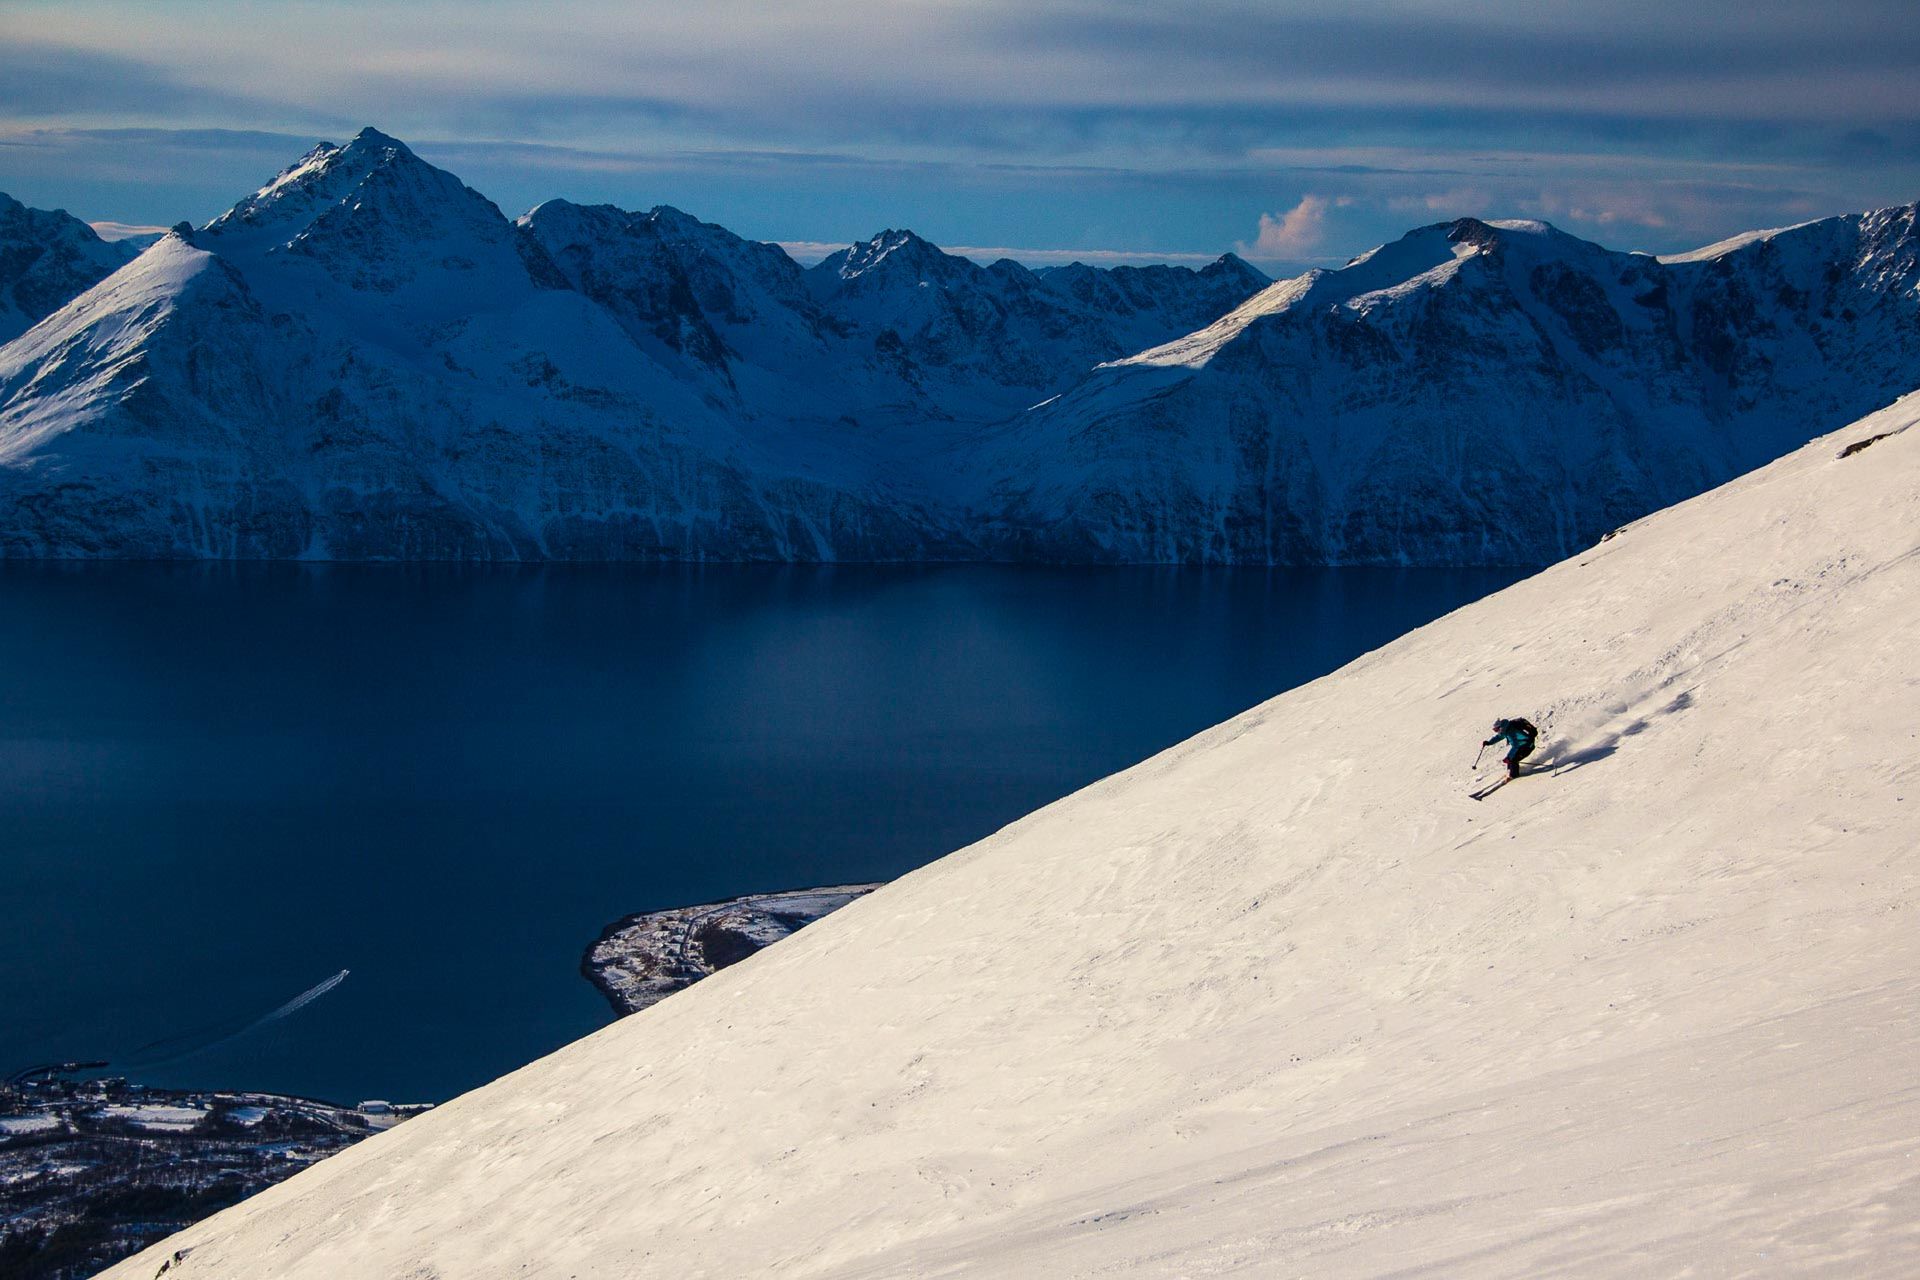 Abfahrtsgenuss In Norwegen Bei Der Skitourenreise In Die Lyngenalpen Bei Tromsoe